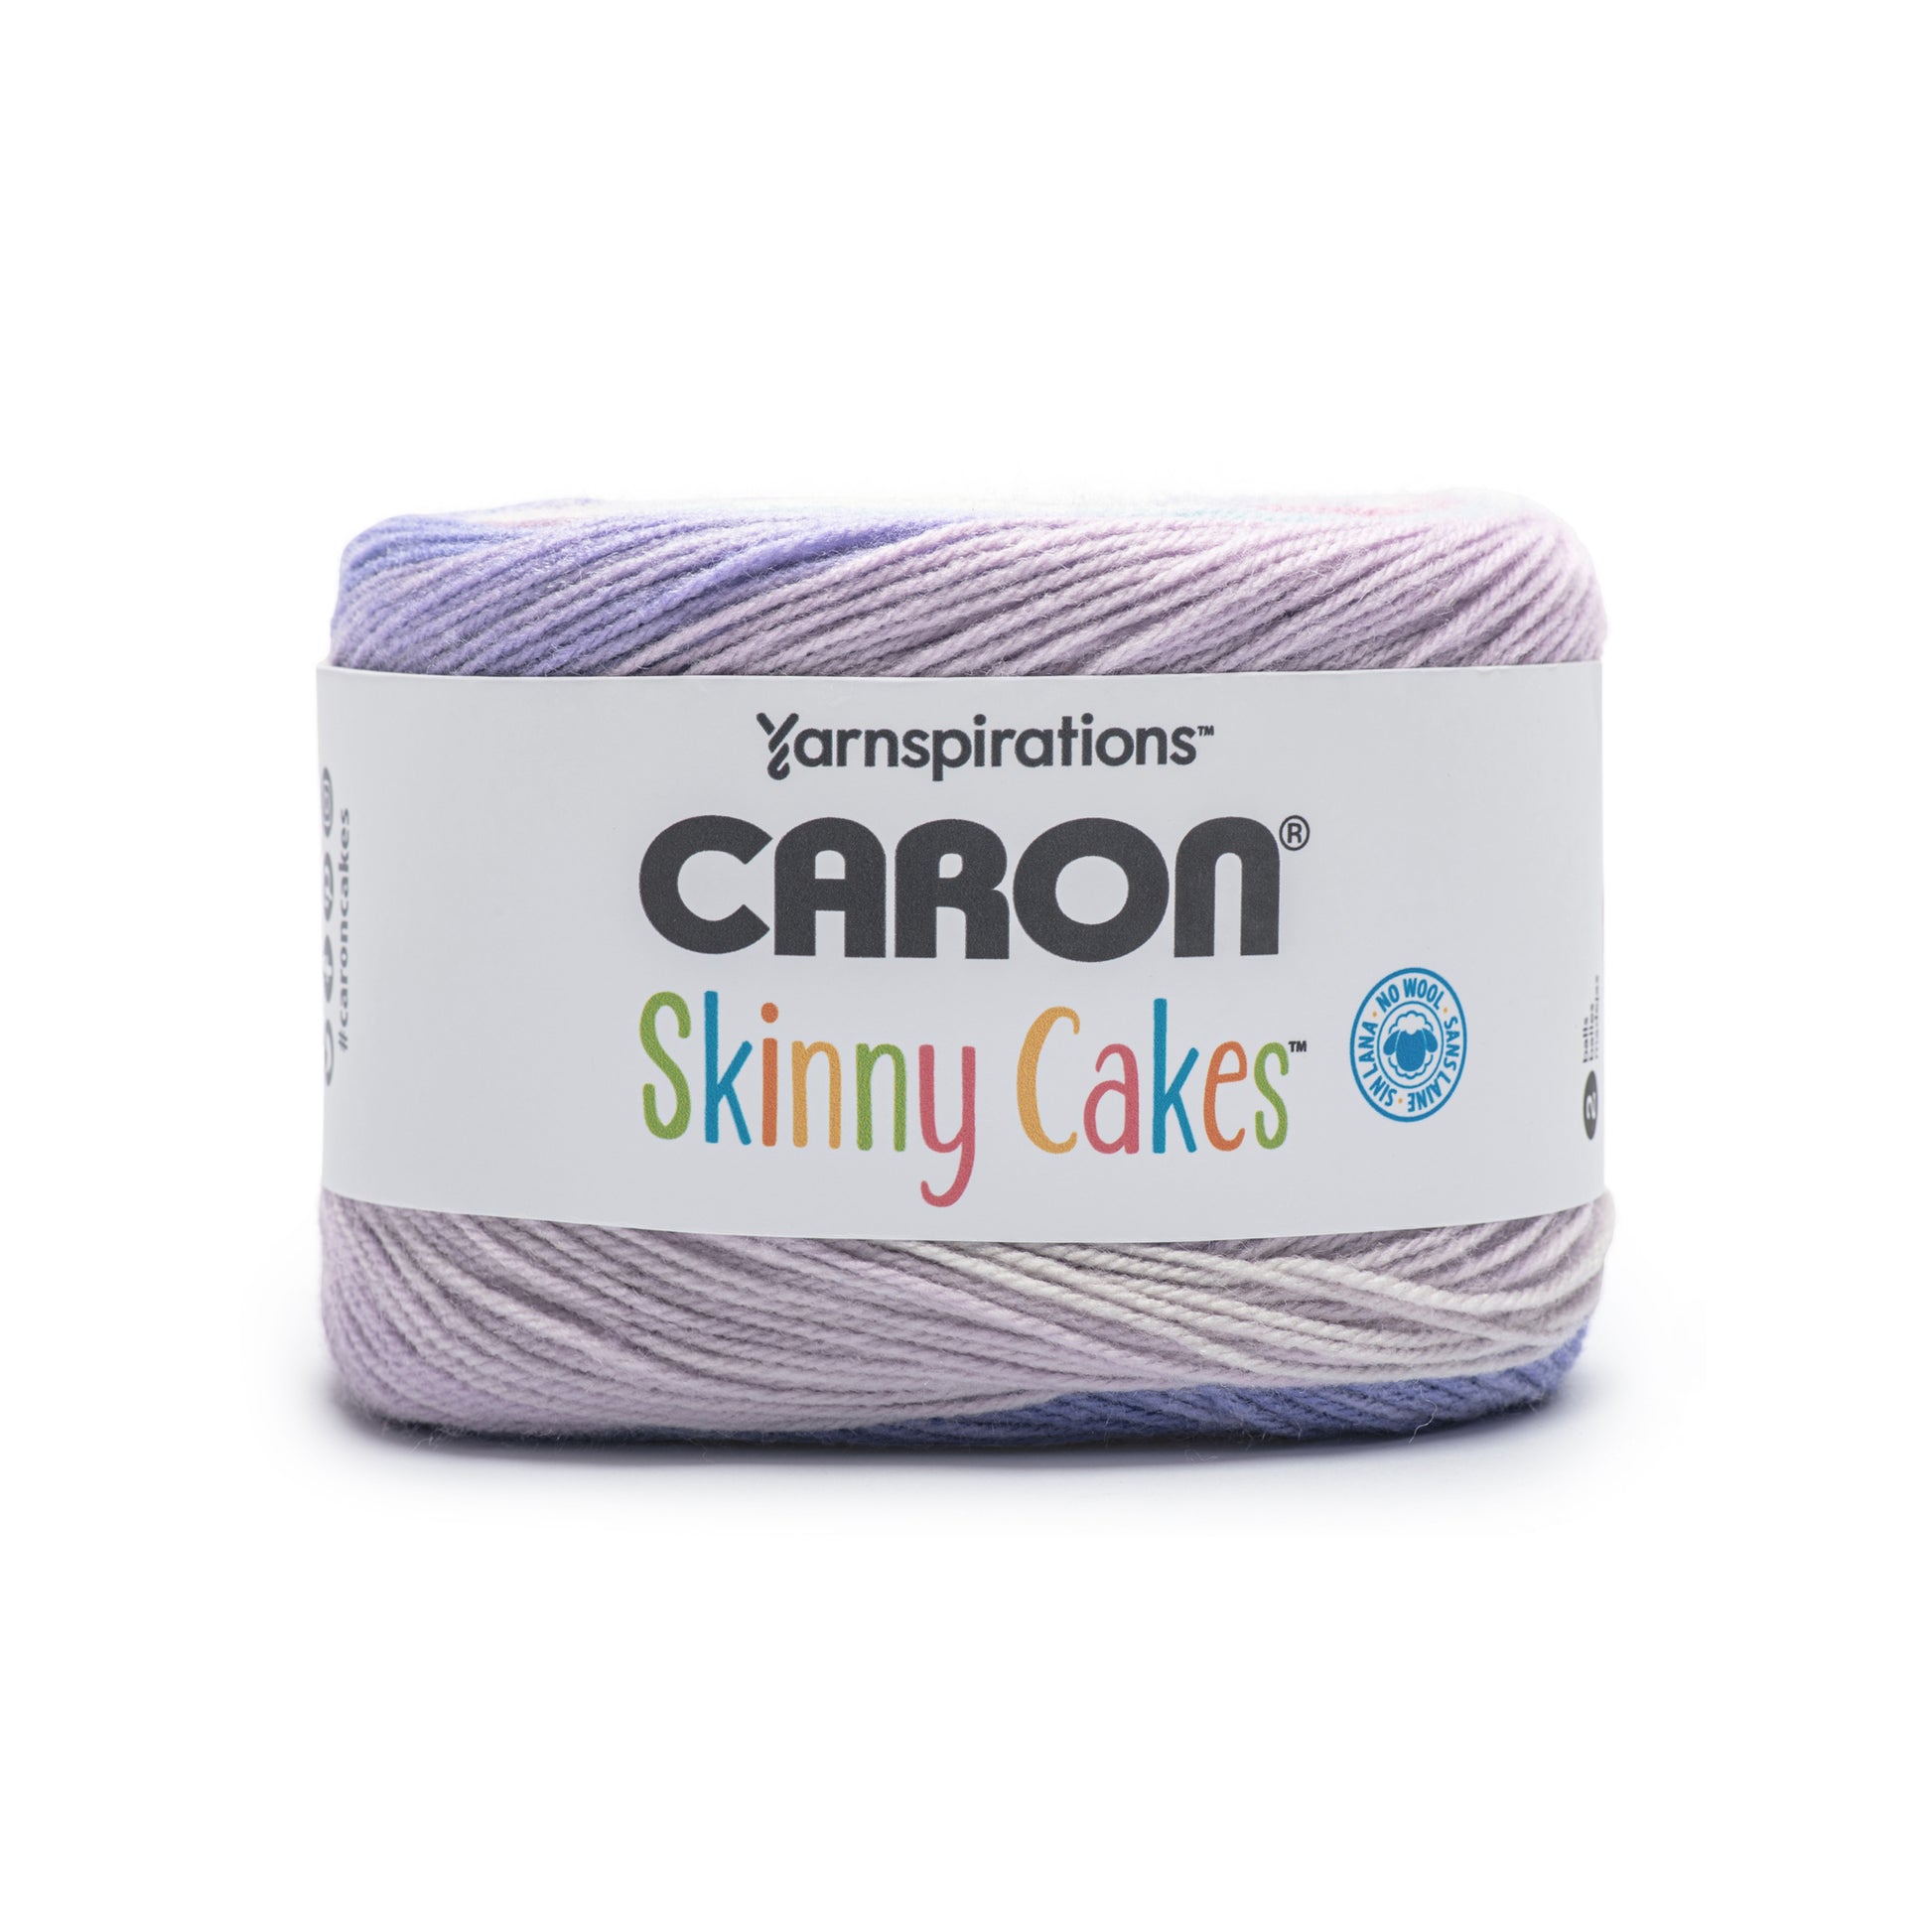 Caron Skinny Cakes Yarn